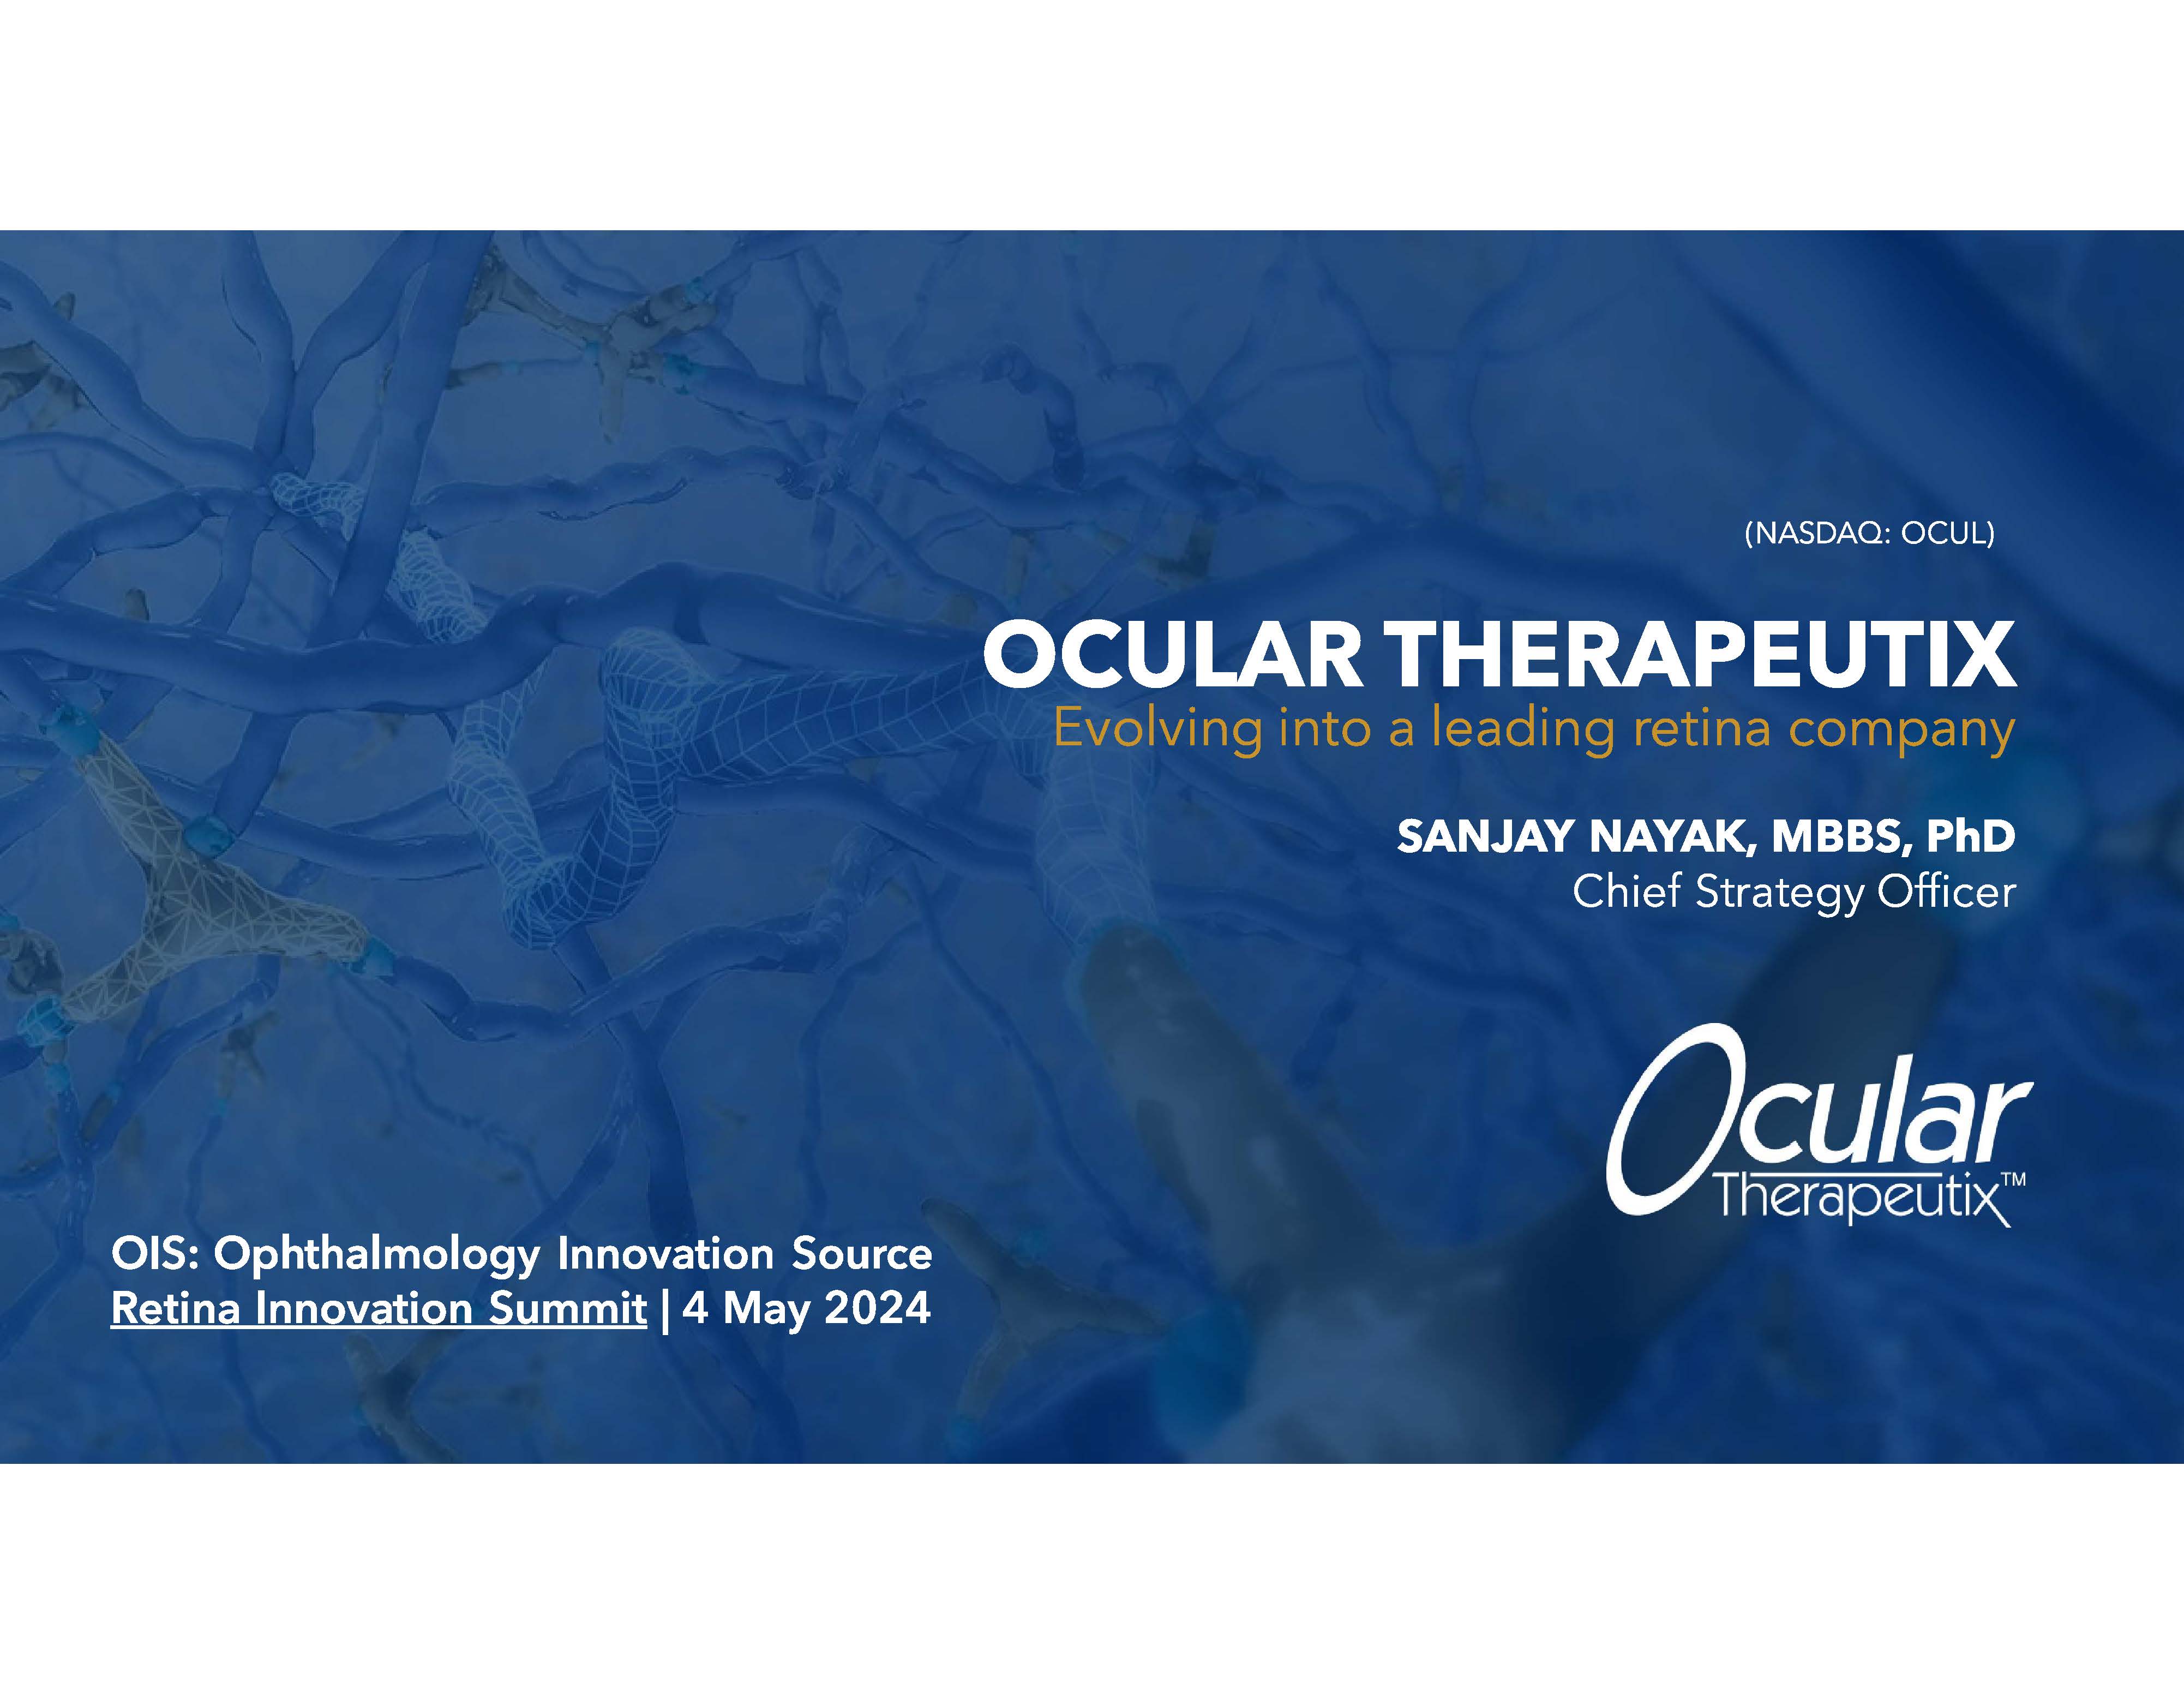 OIS Retina: Ocular Therapeutix Presentation